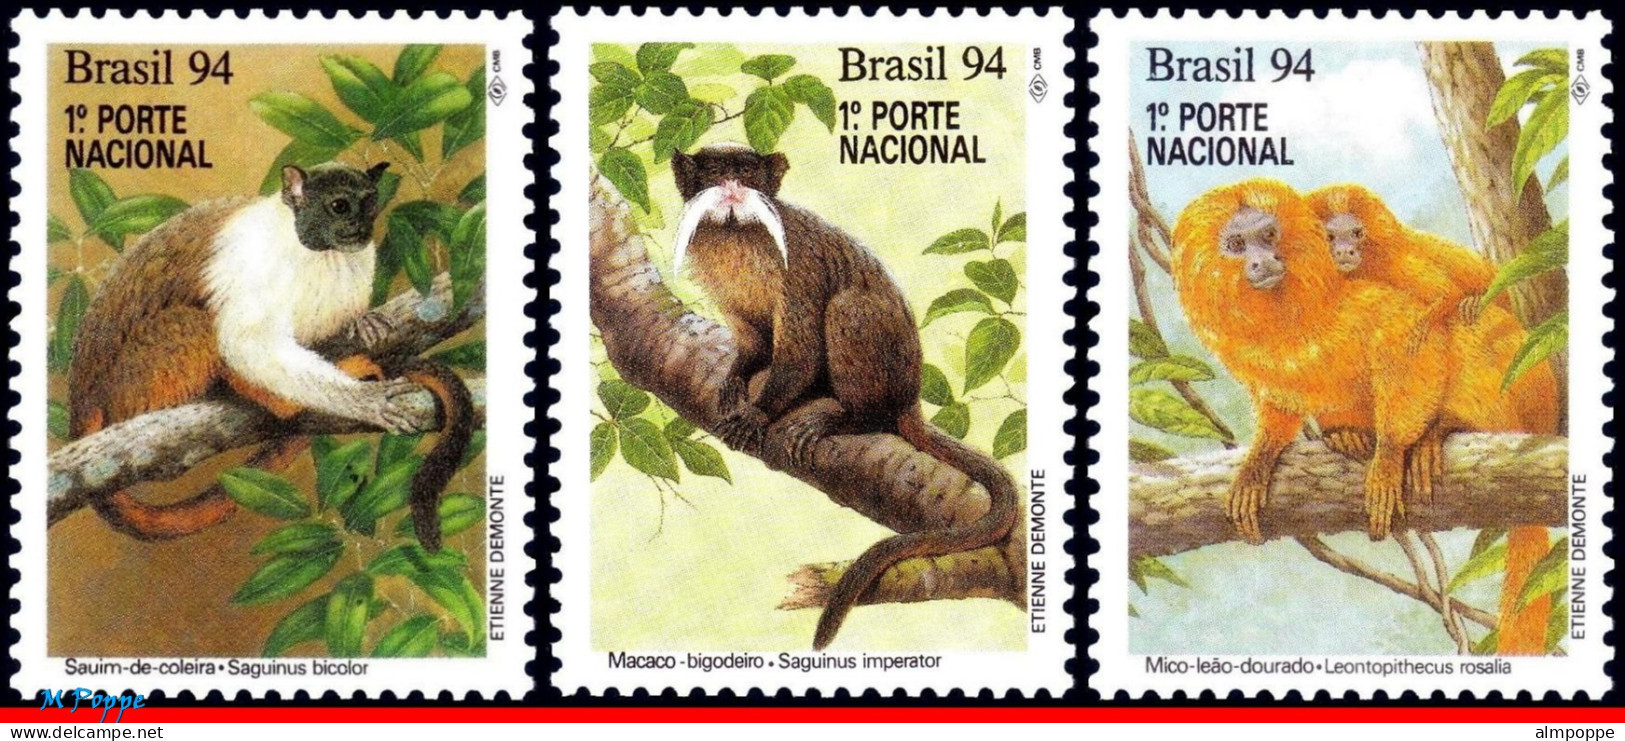 Ref. BR-2474-76 BRAZIL 1994 - MONKEYS, NATURE,PRESERVATION, MI# 2589-2591, SET MNH, ANIMALS, FAUNA 3V Sc# 2474-2476 - Ungebraucht